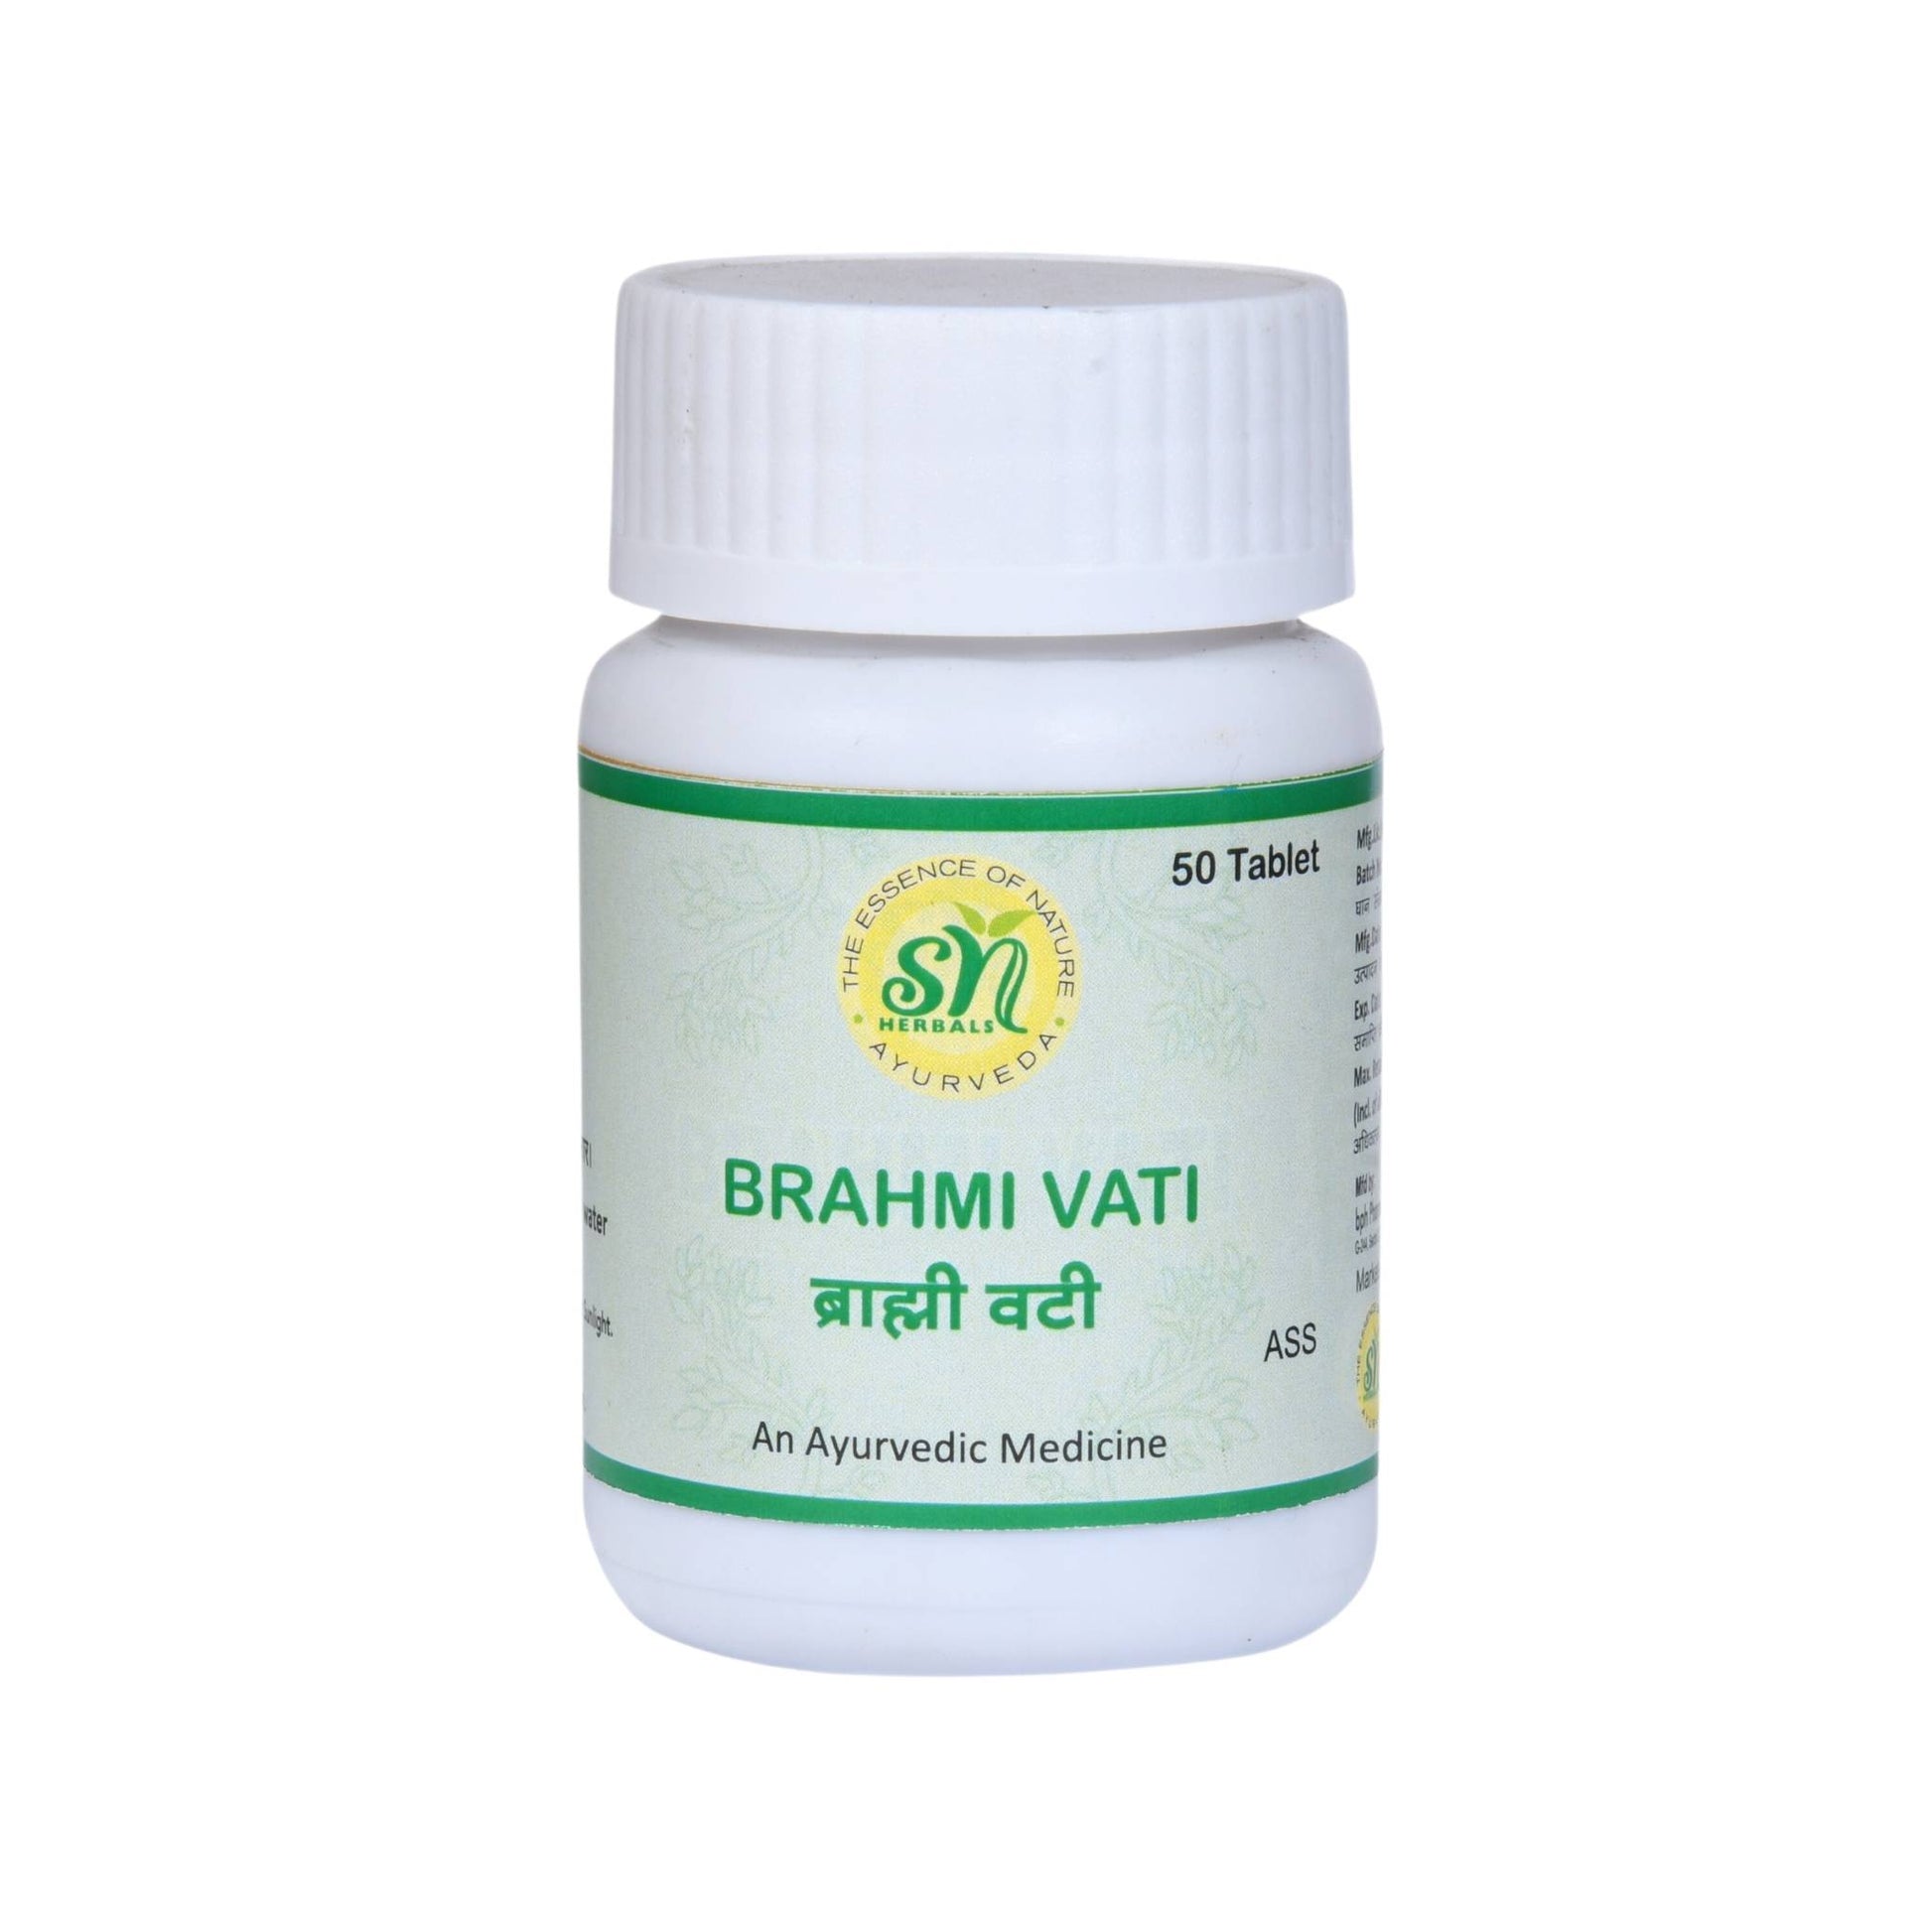 BRAHMI VATI (50 Tablets) - SN HERBALS